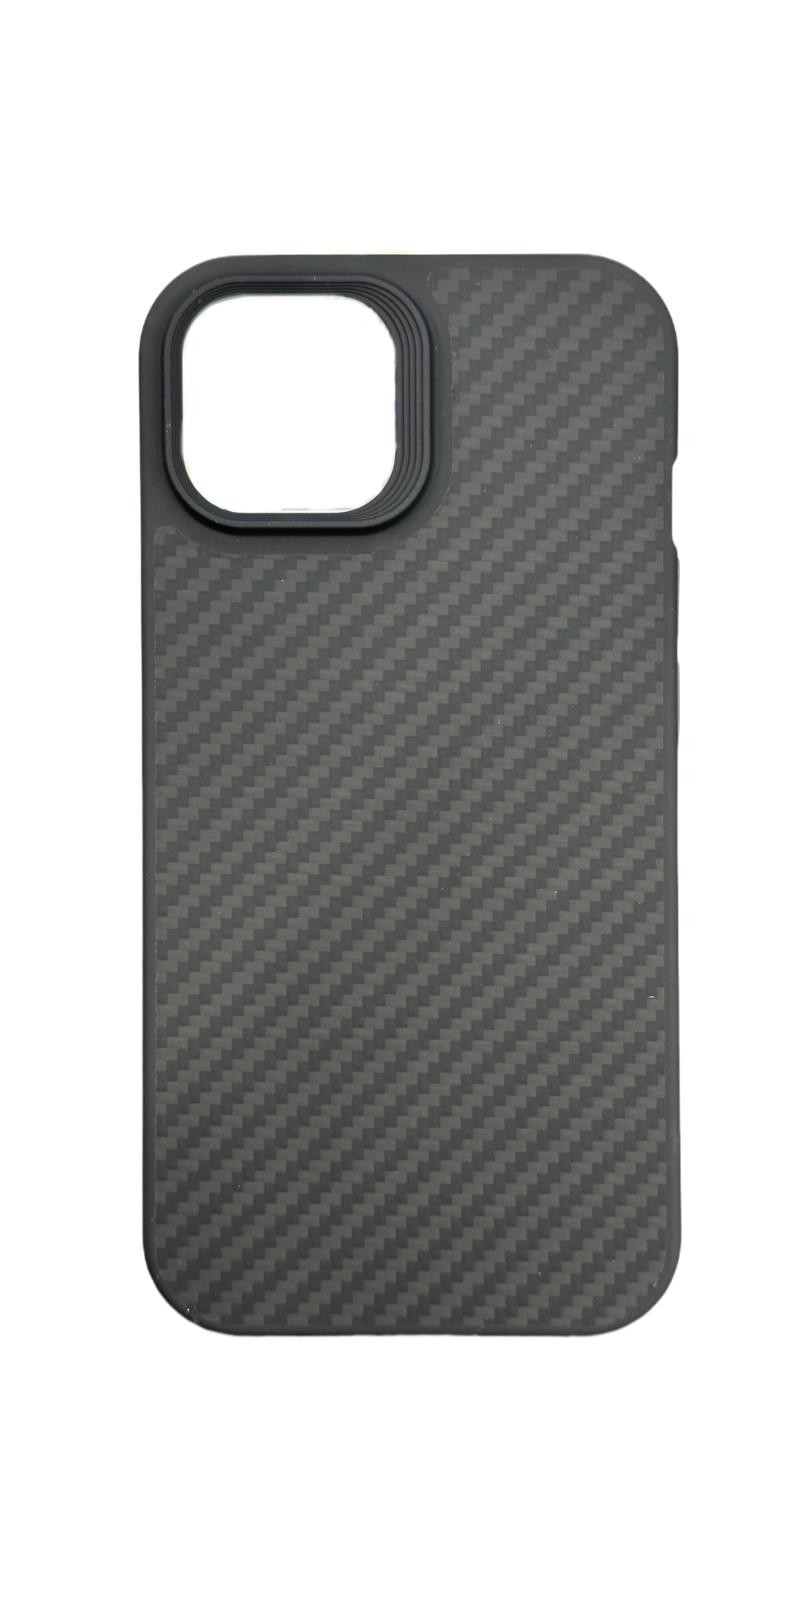 Gokit Karbon Kevlar 600D Extreme Serisi Kılıf for iPhone 13